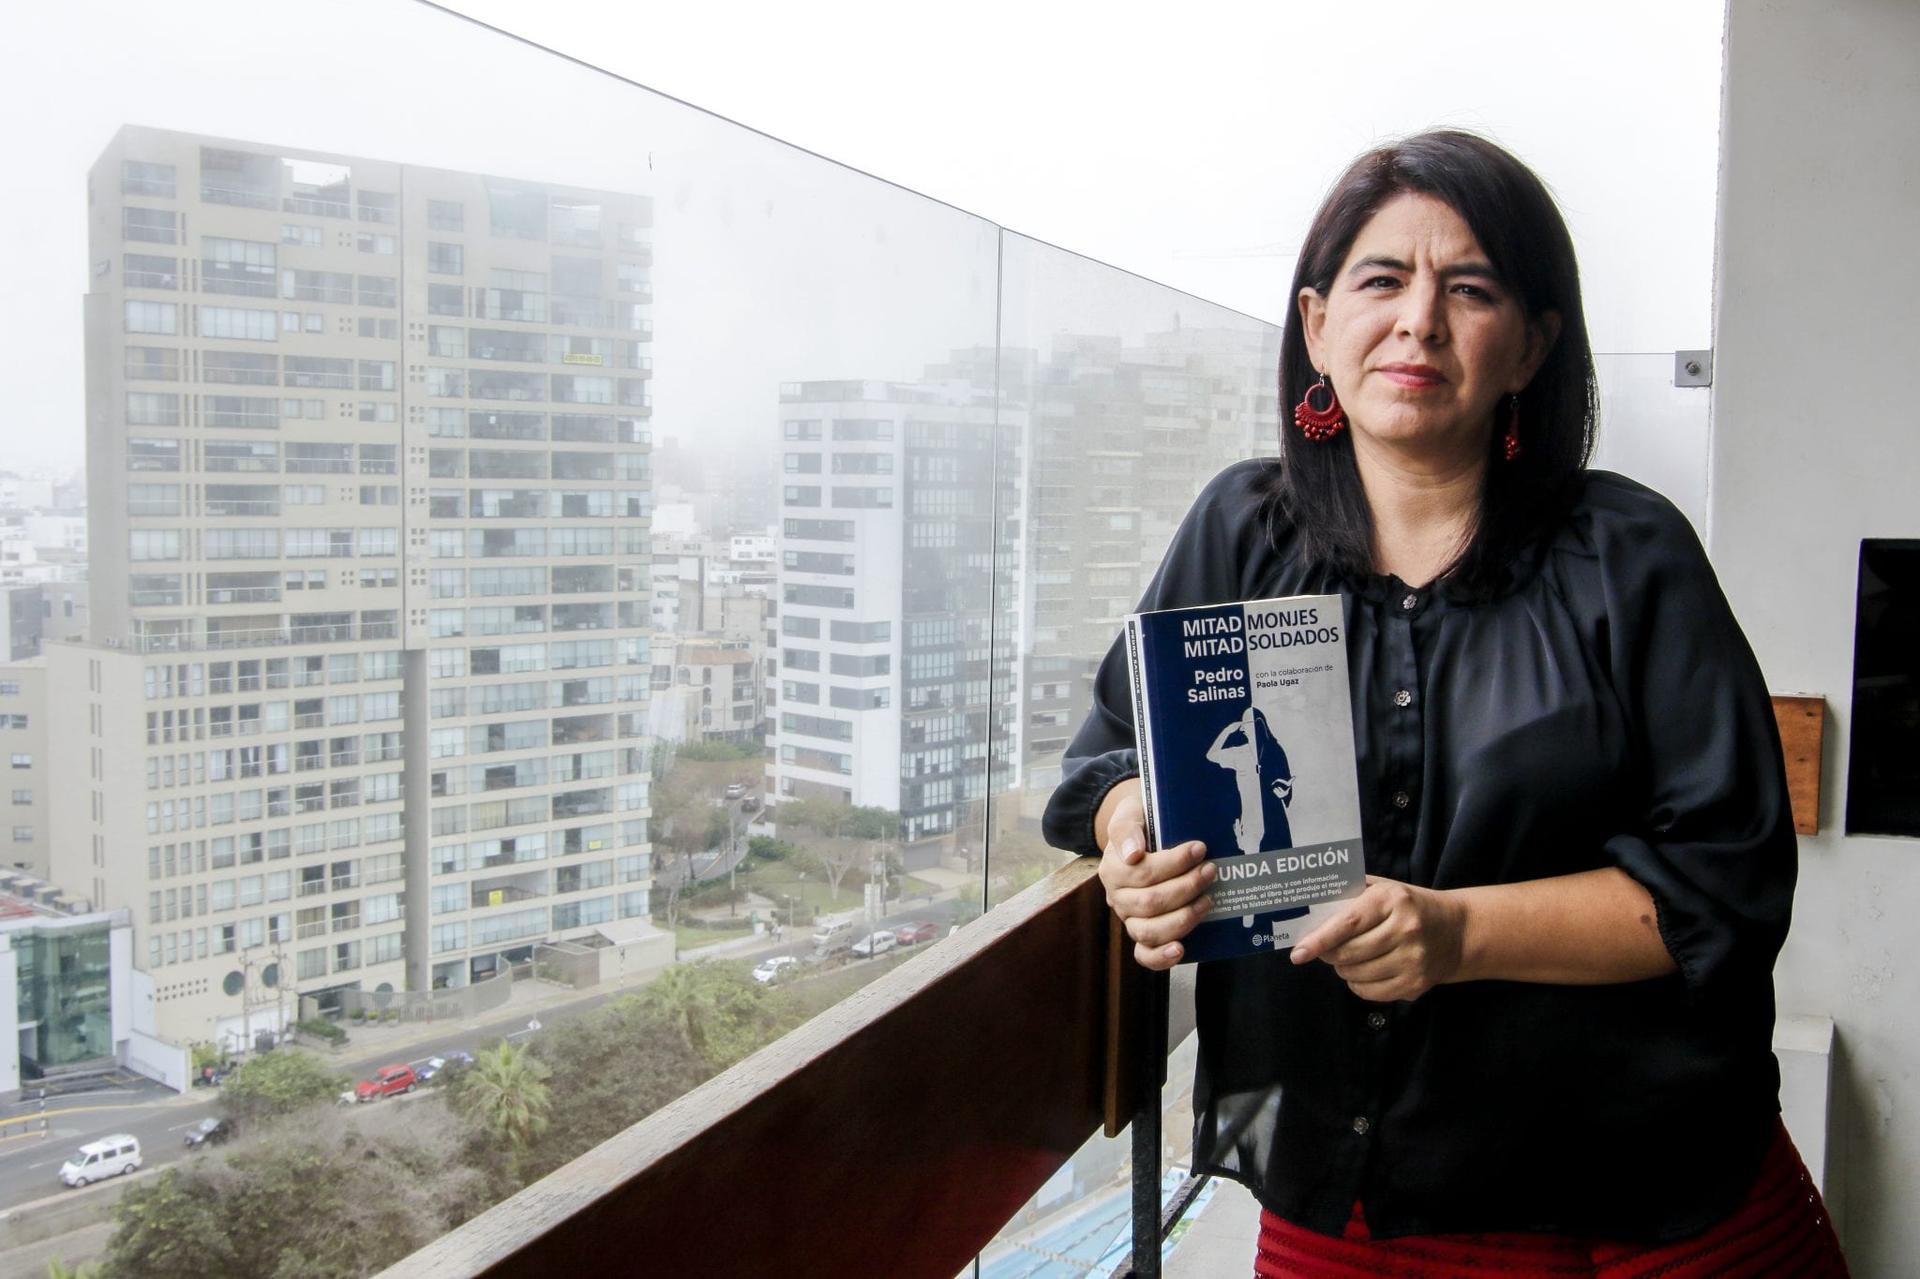 Peruvian journalist who unveiled Catholic scandals wins press award